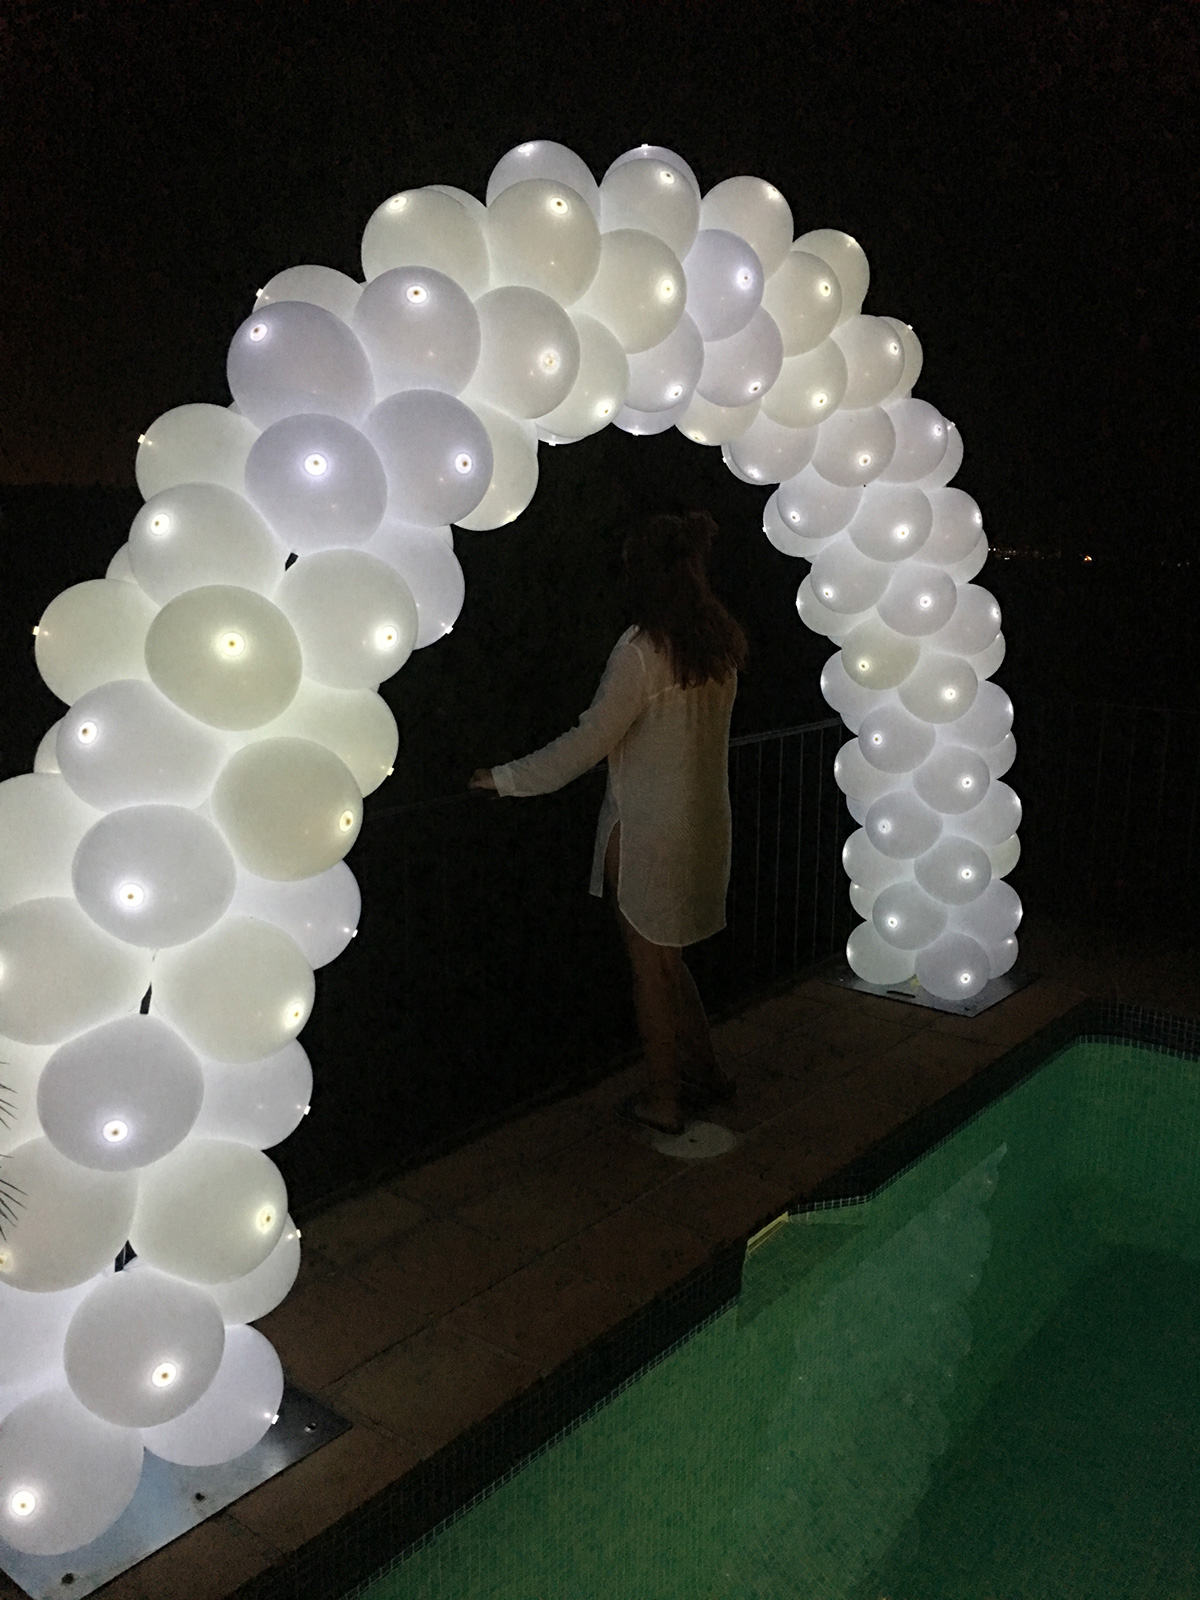 Fantastico Wedding Balloons on the Costa del Sol